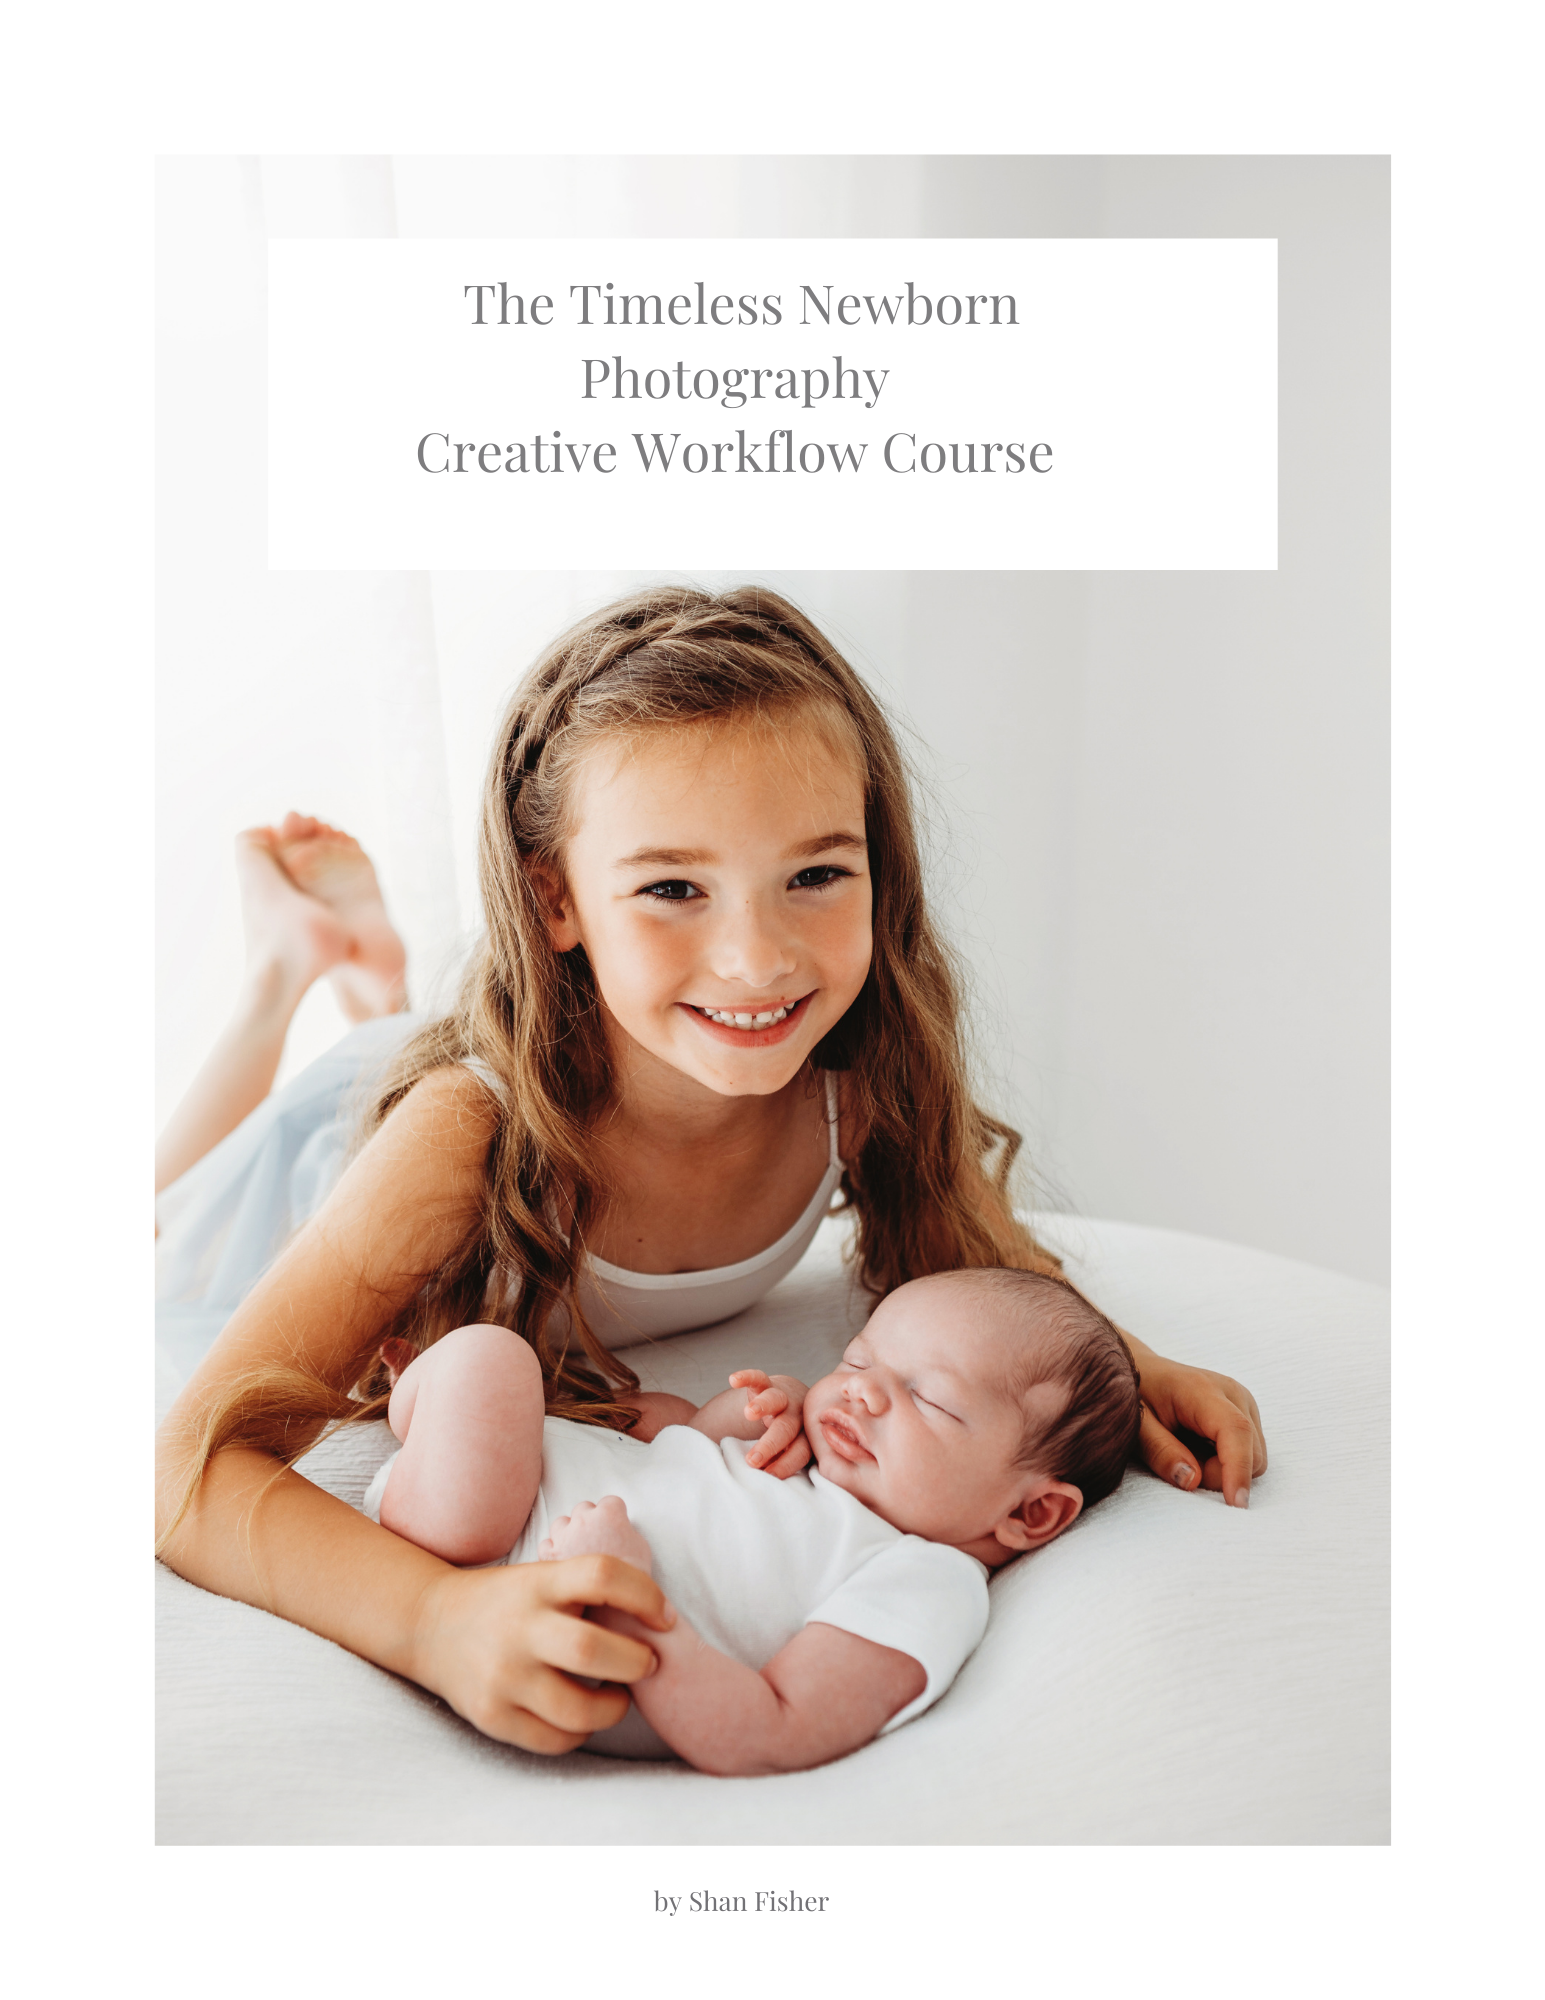 Copy of The Timeless Newborn Workflow Foundation